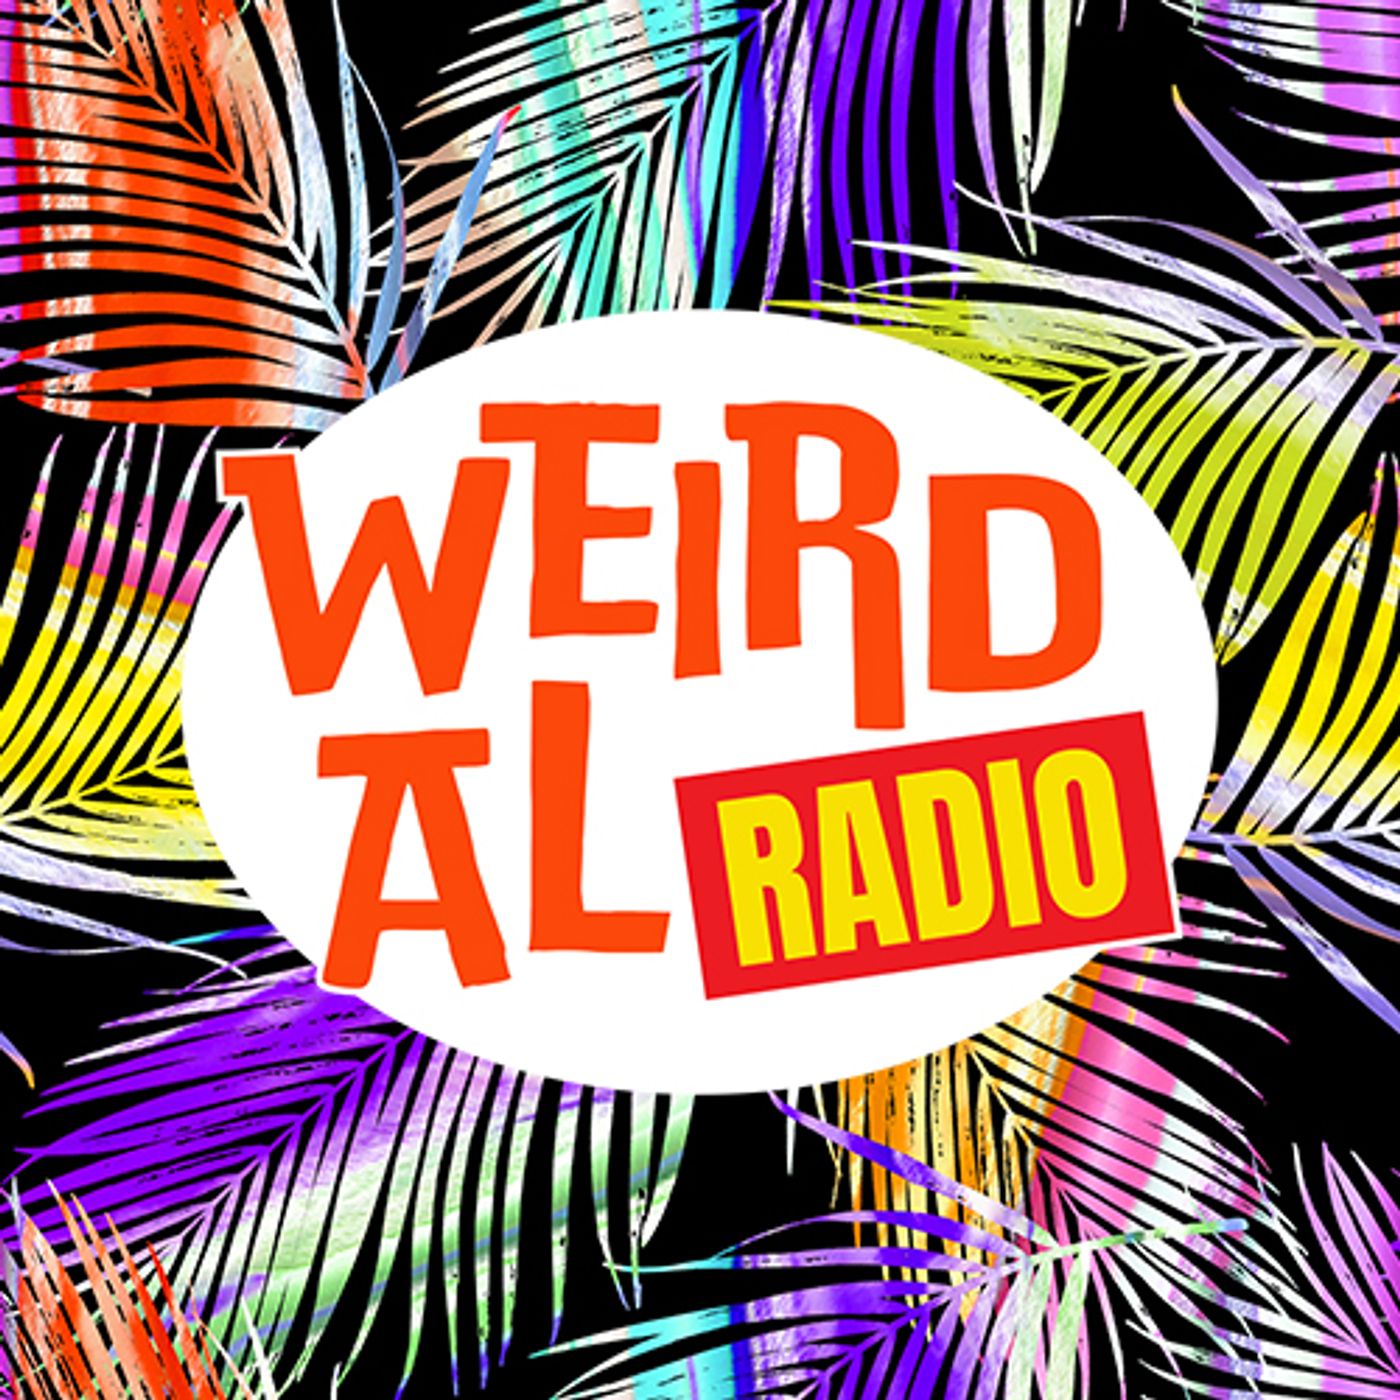 Bonus Episode: Weird Al Radio!